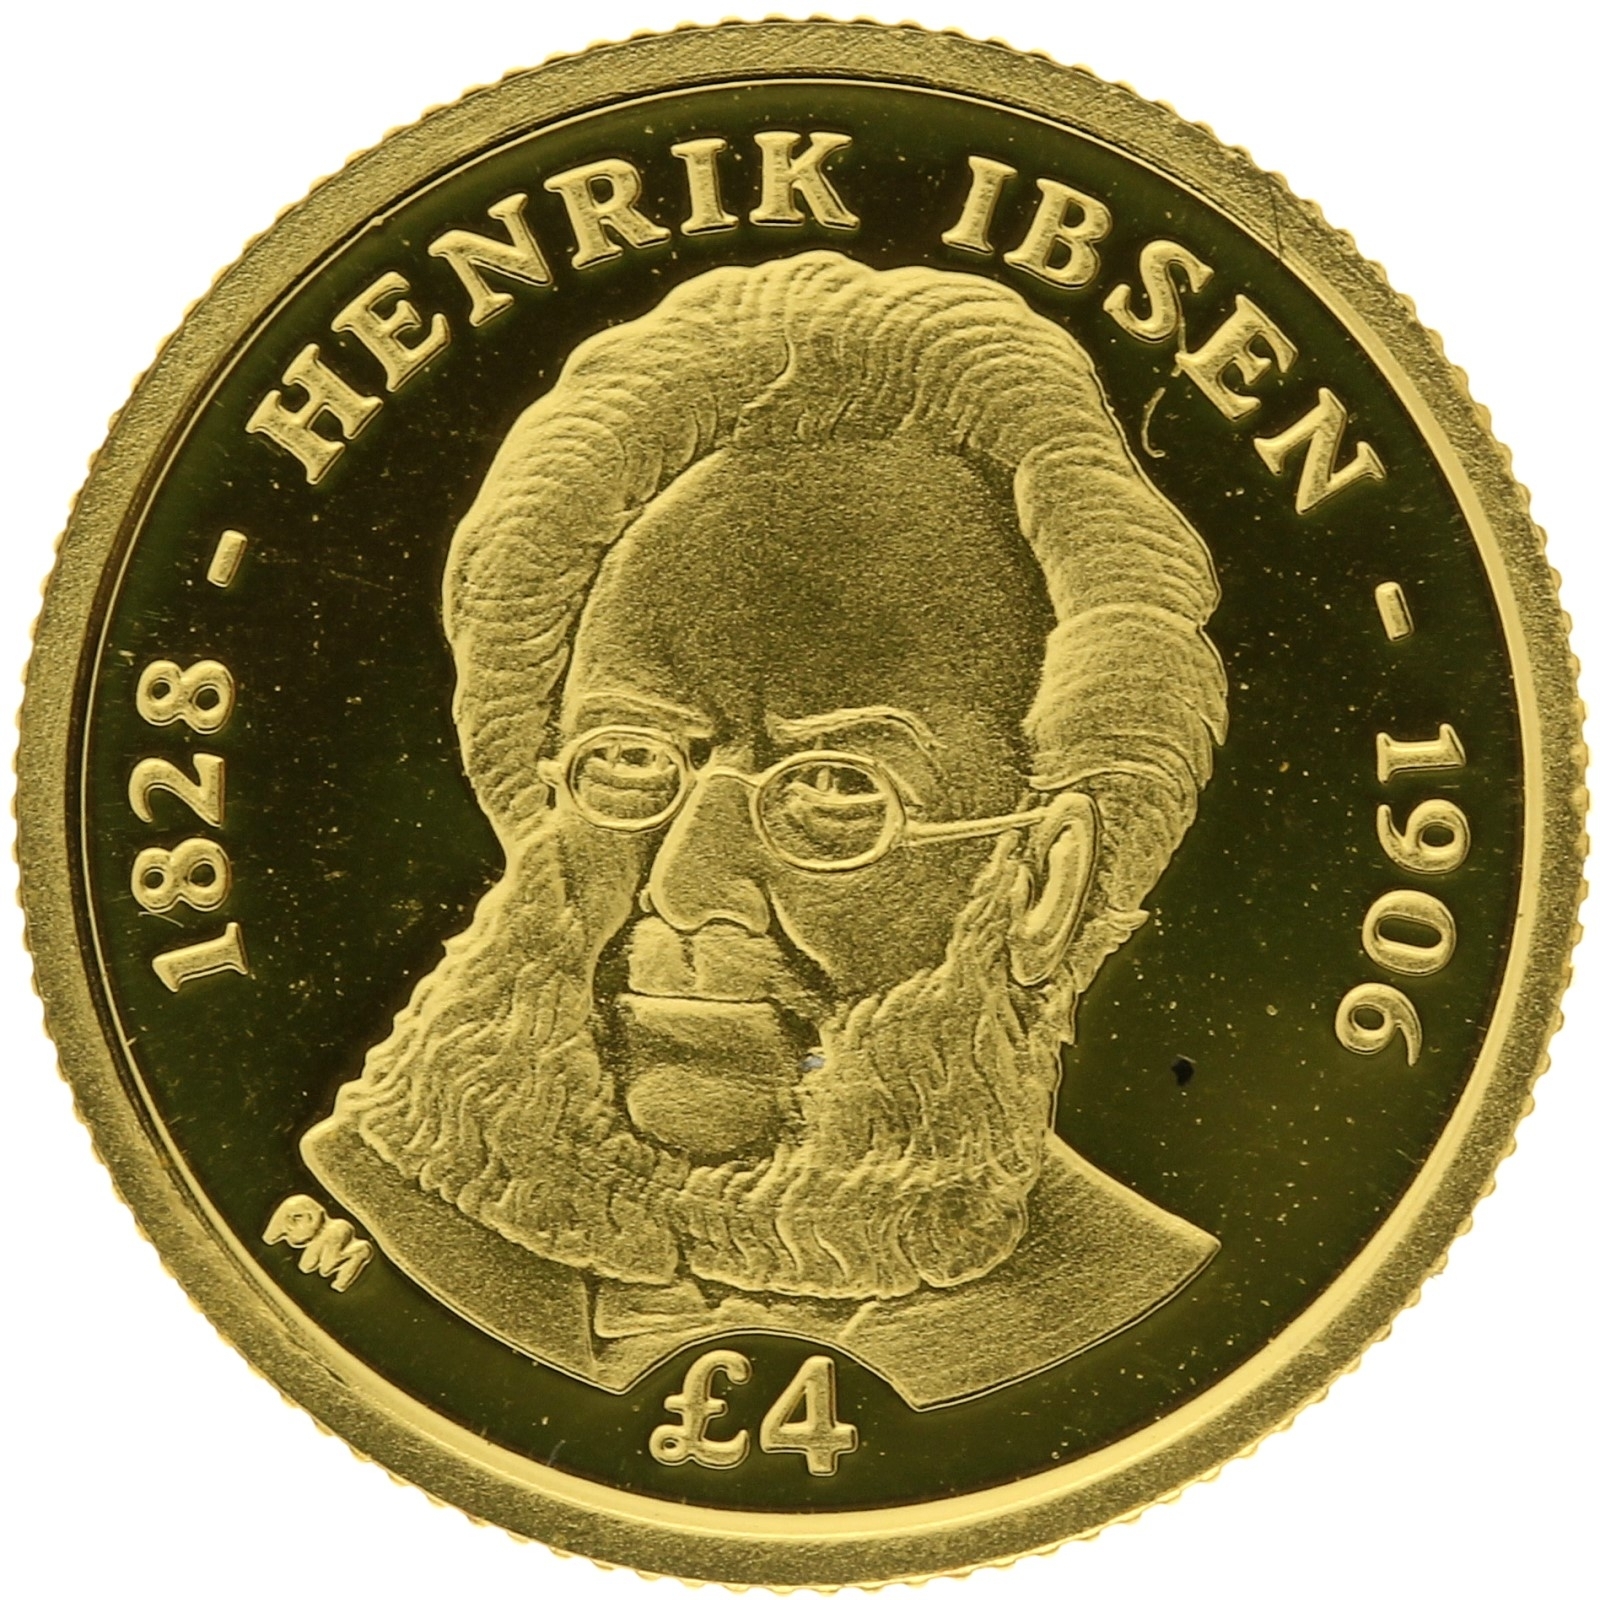 South Georgia and South Sandwich Islands - 4 Pounds - 2006 - Henrik Ibsen - 1/25oz 